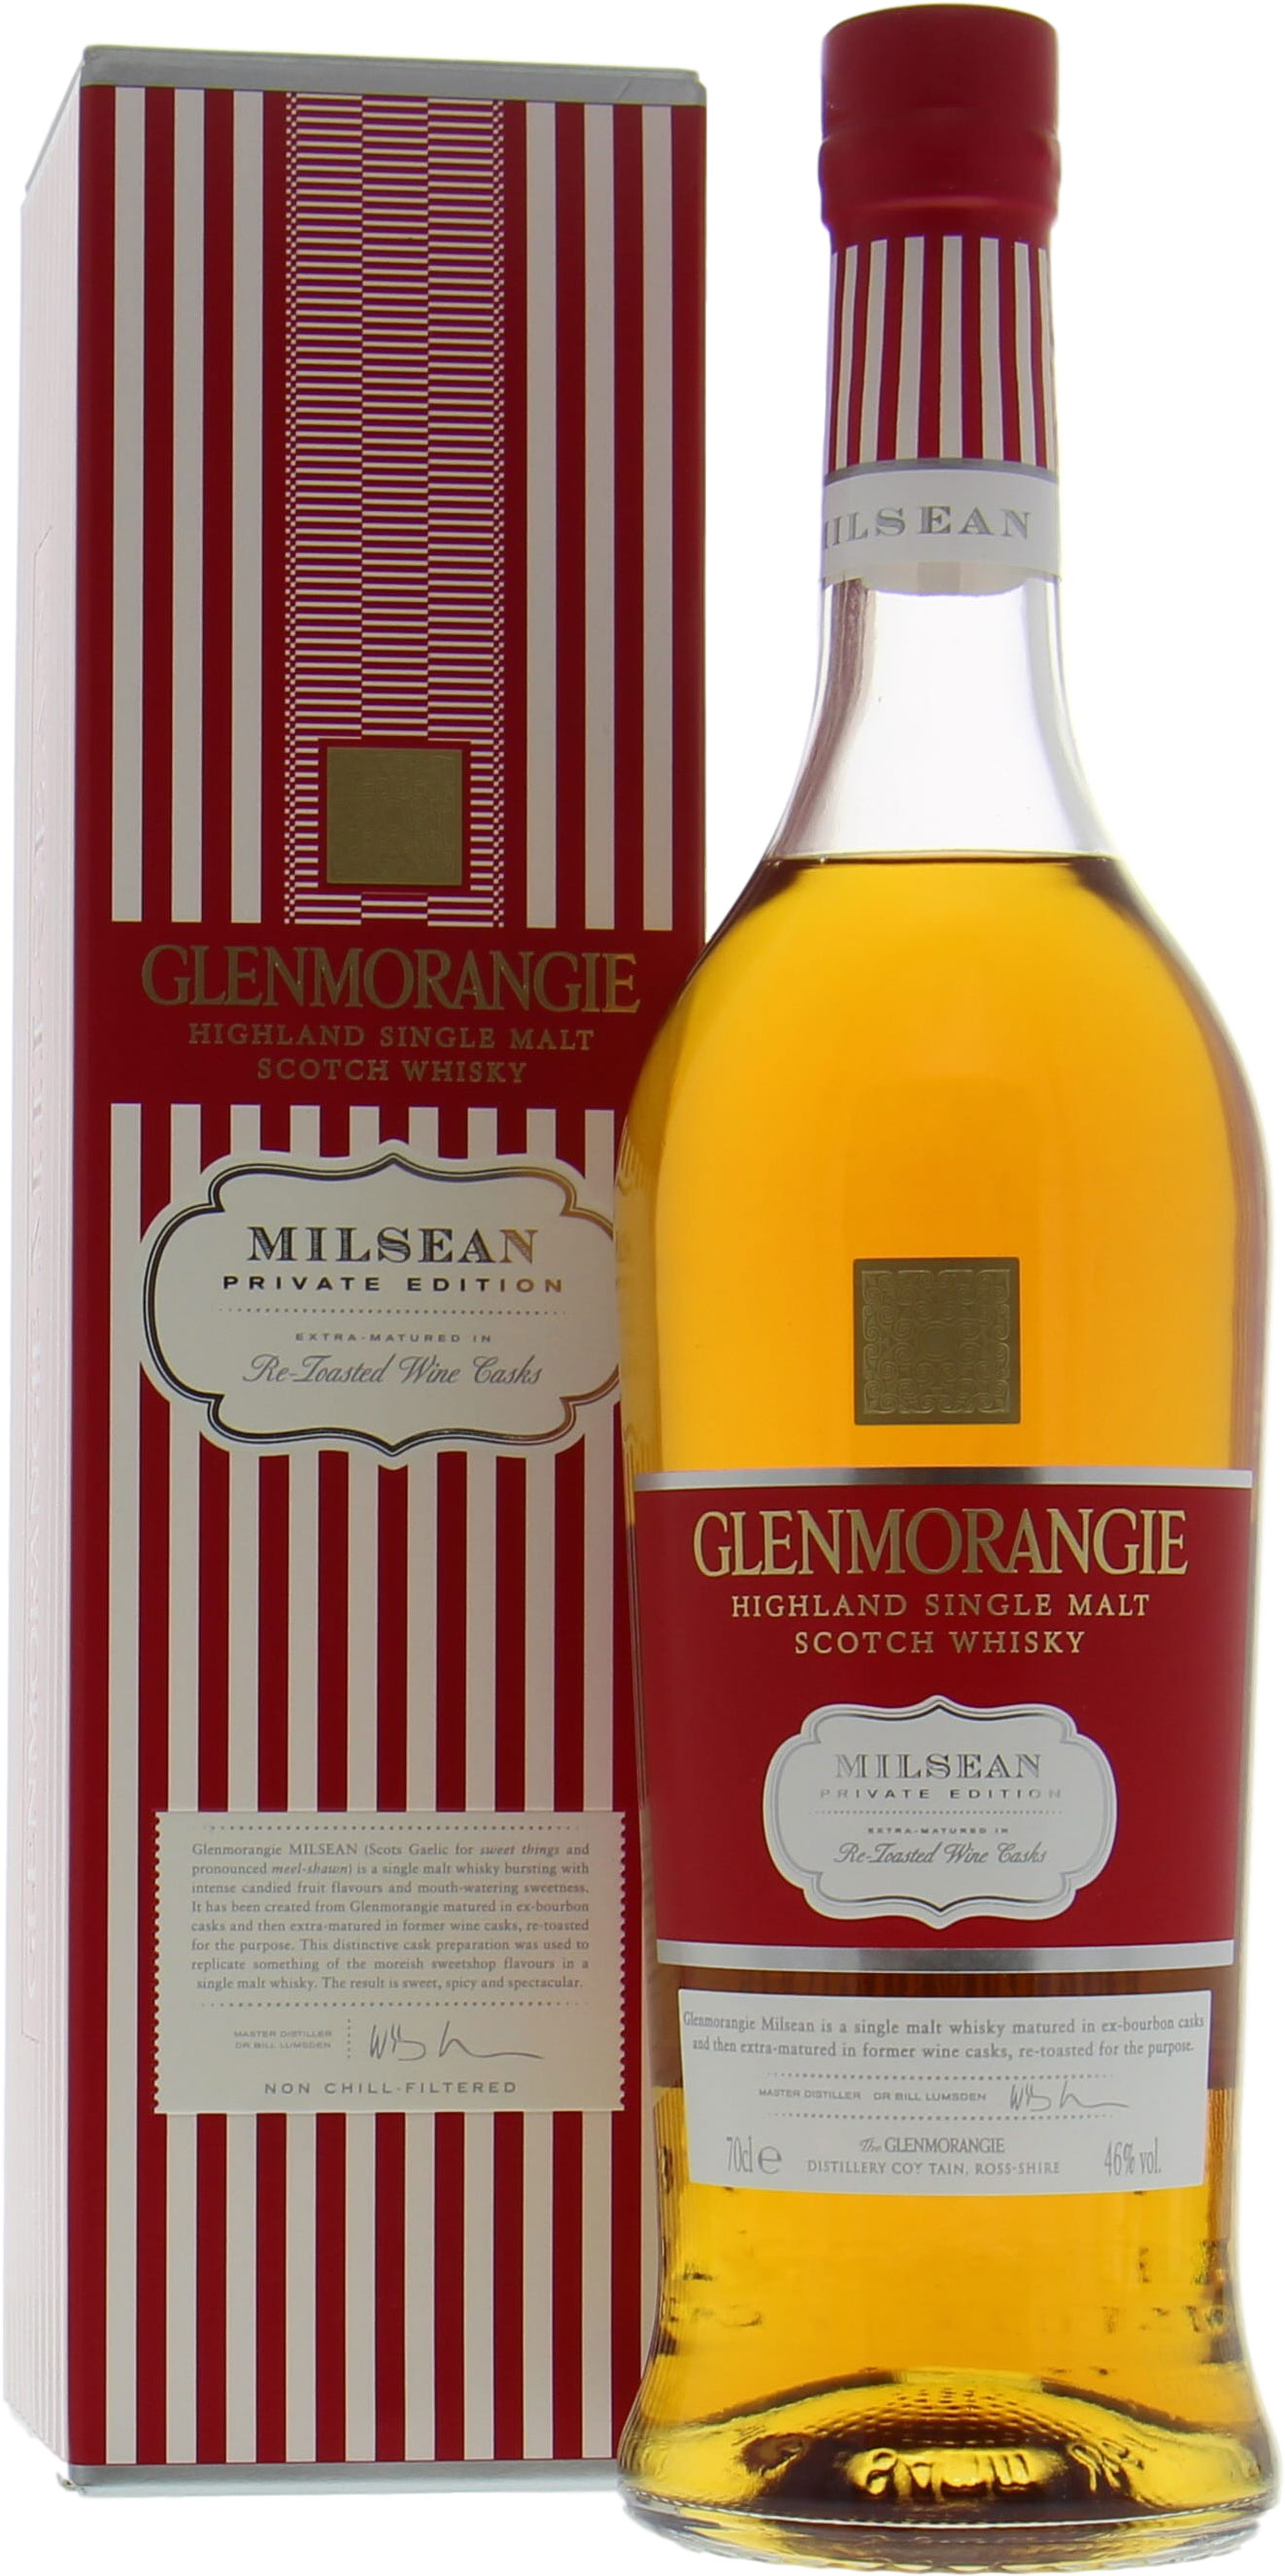 Glenmorangie - Milsean Private Edition 46% NV